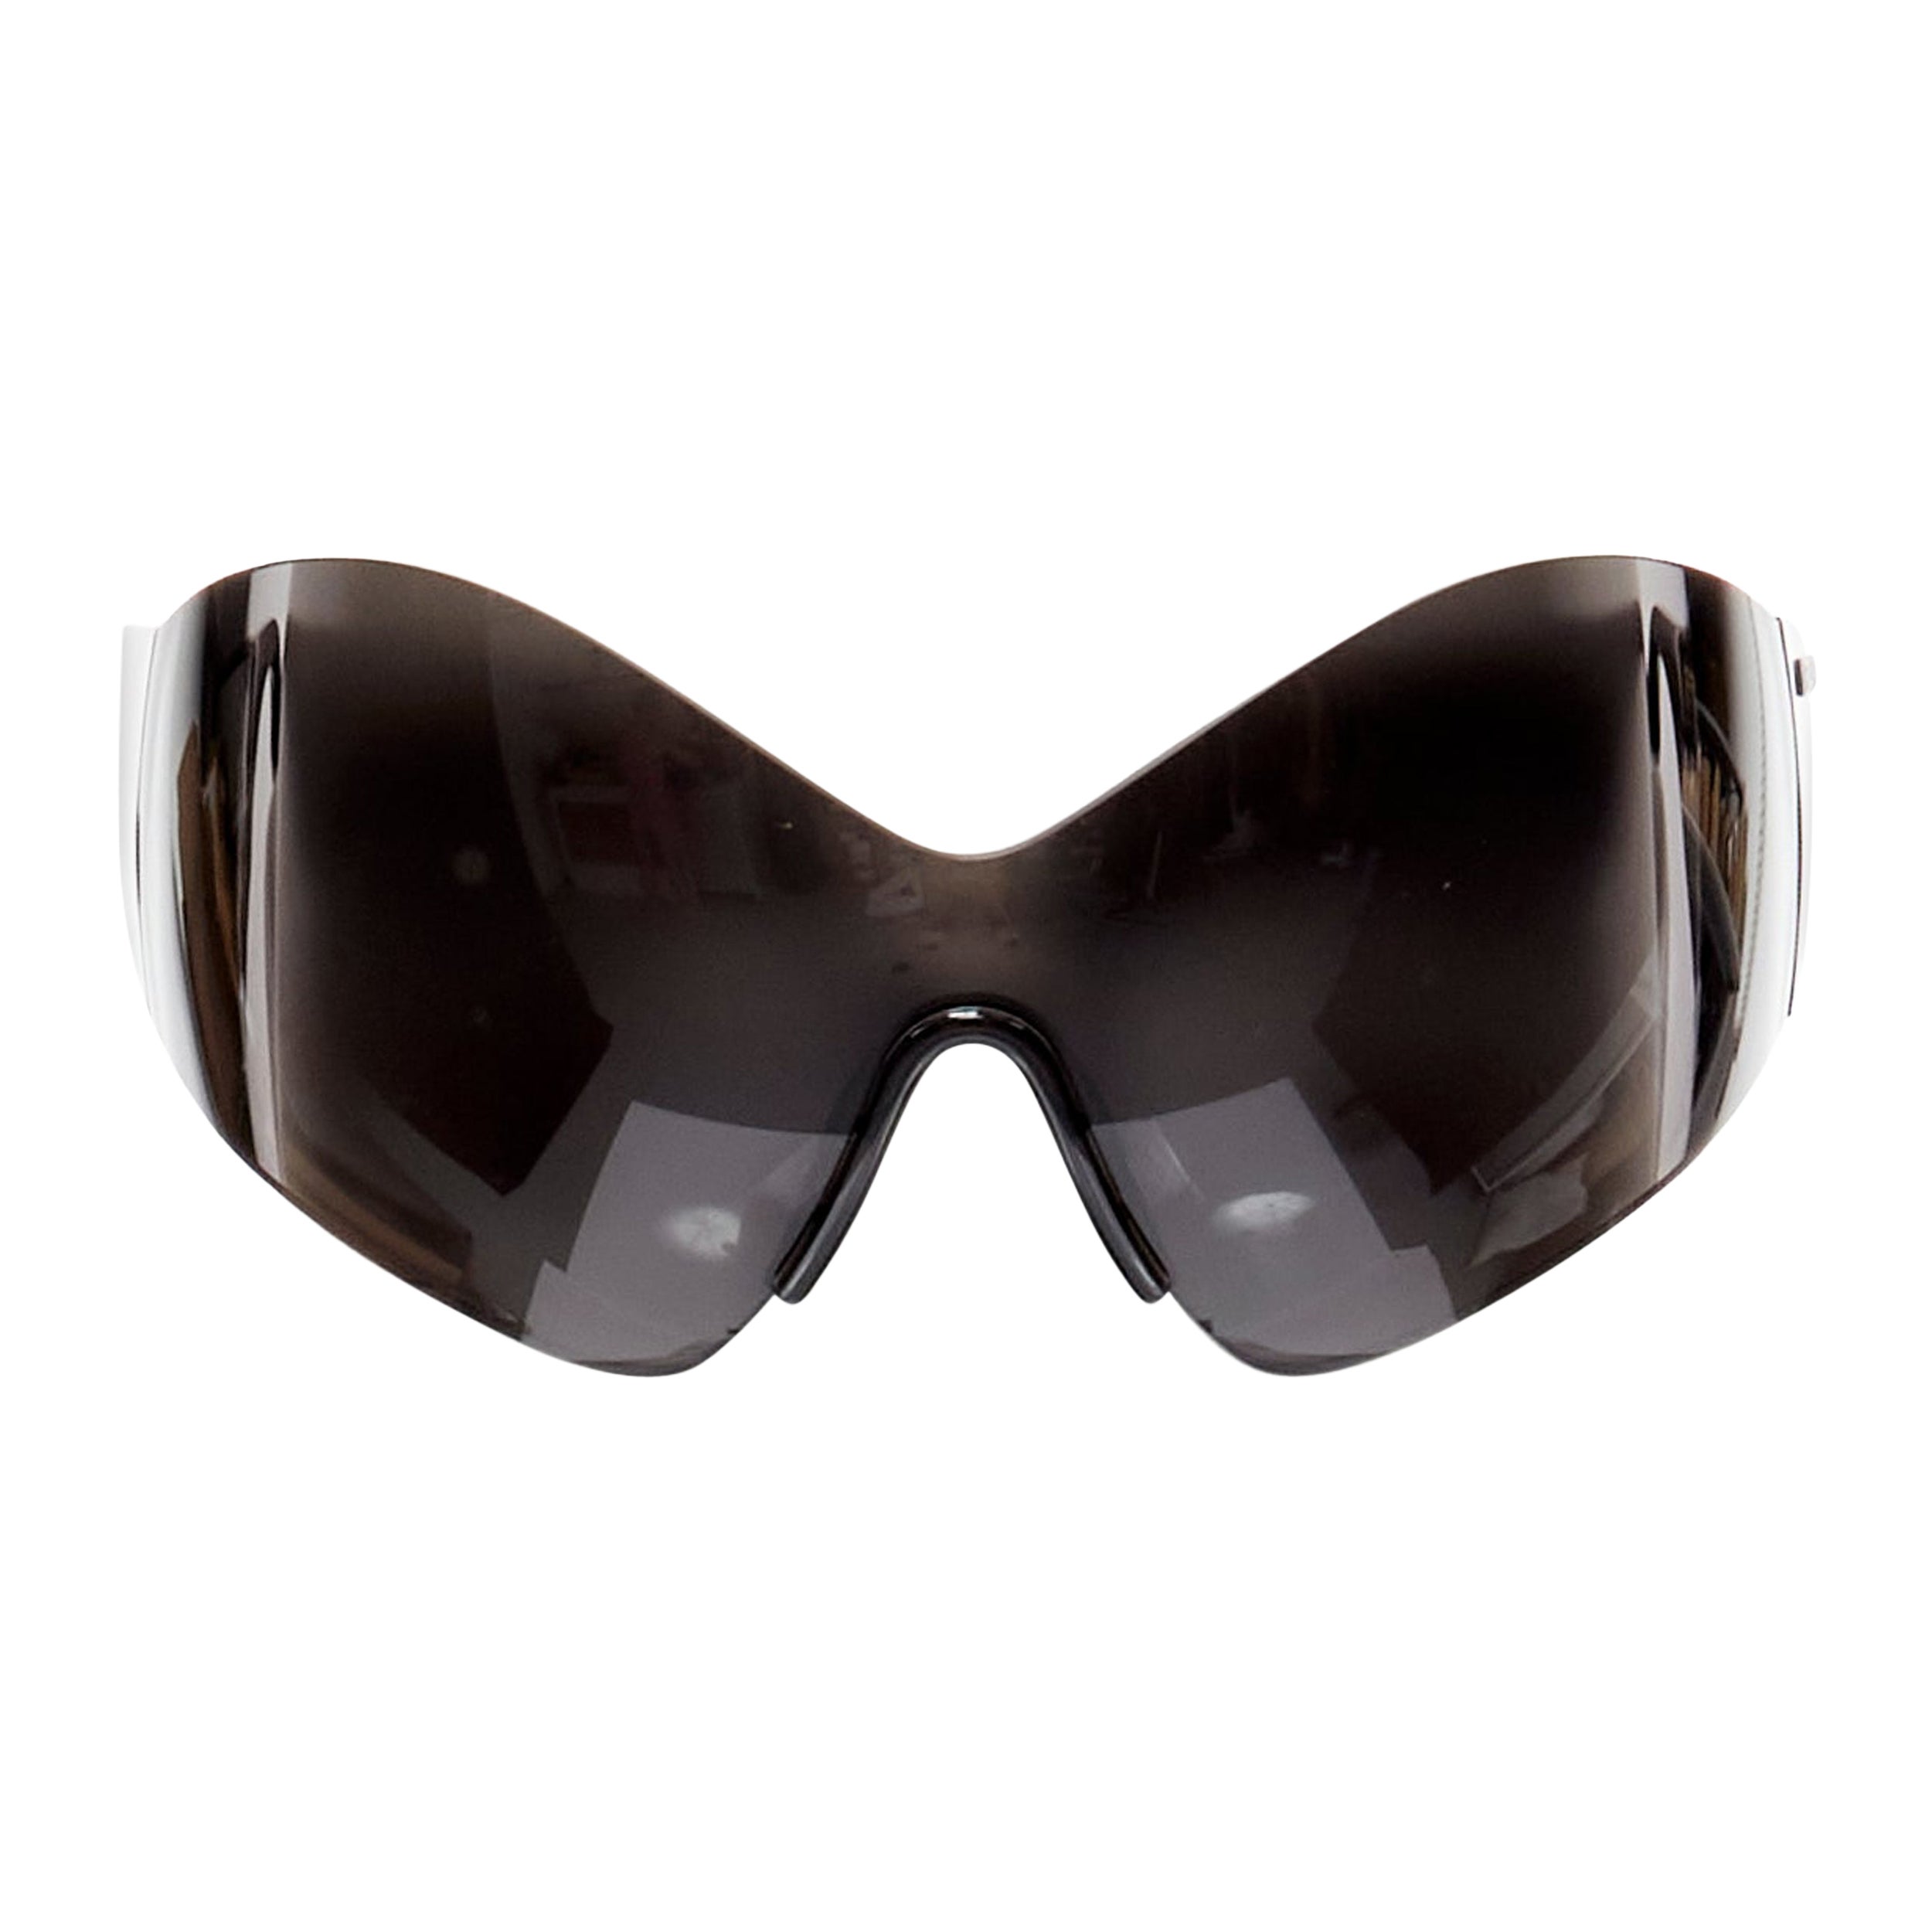 Balenciaga Sunglasses 2021 - For Sale on 1stDibs